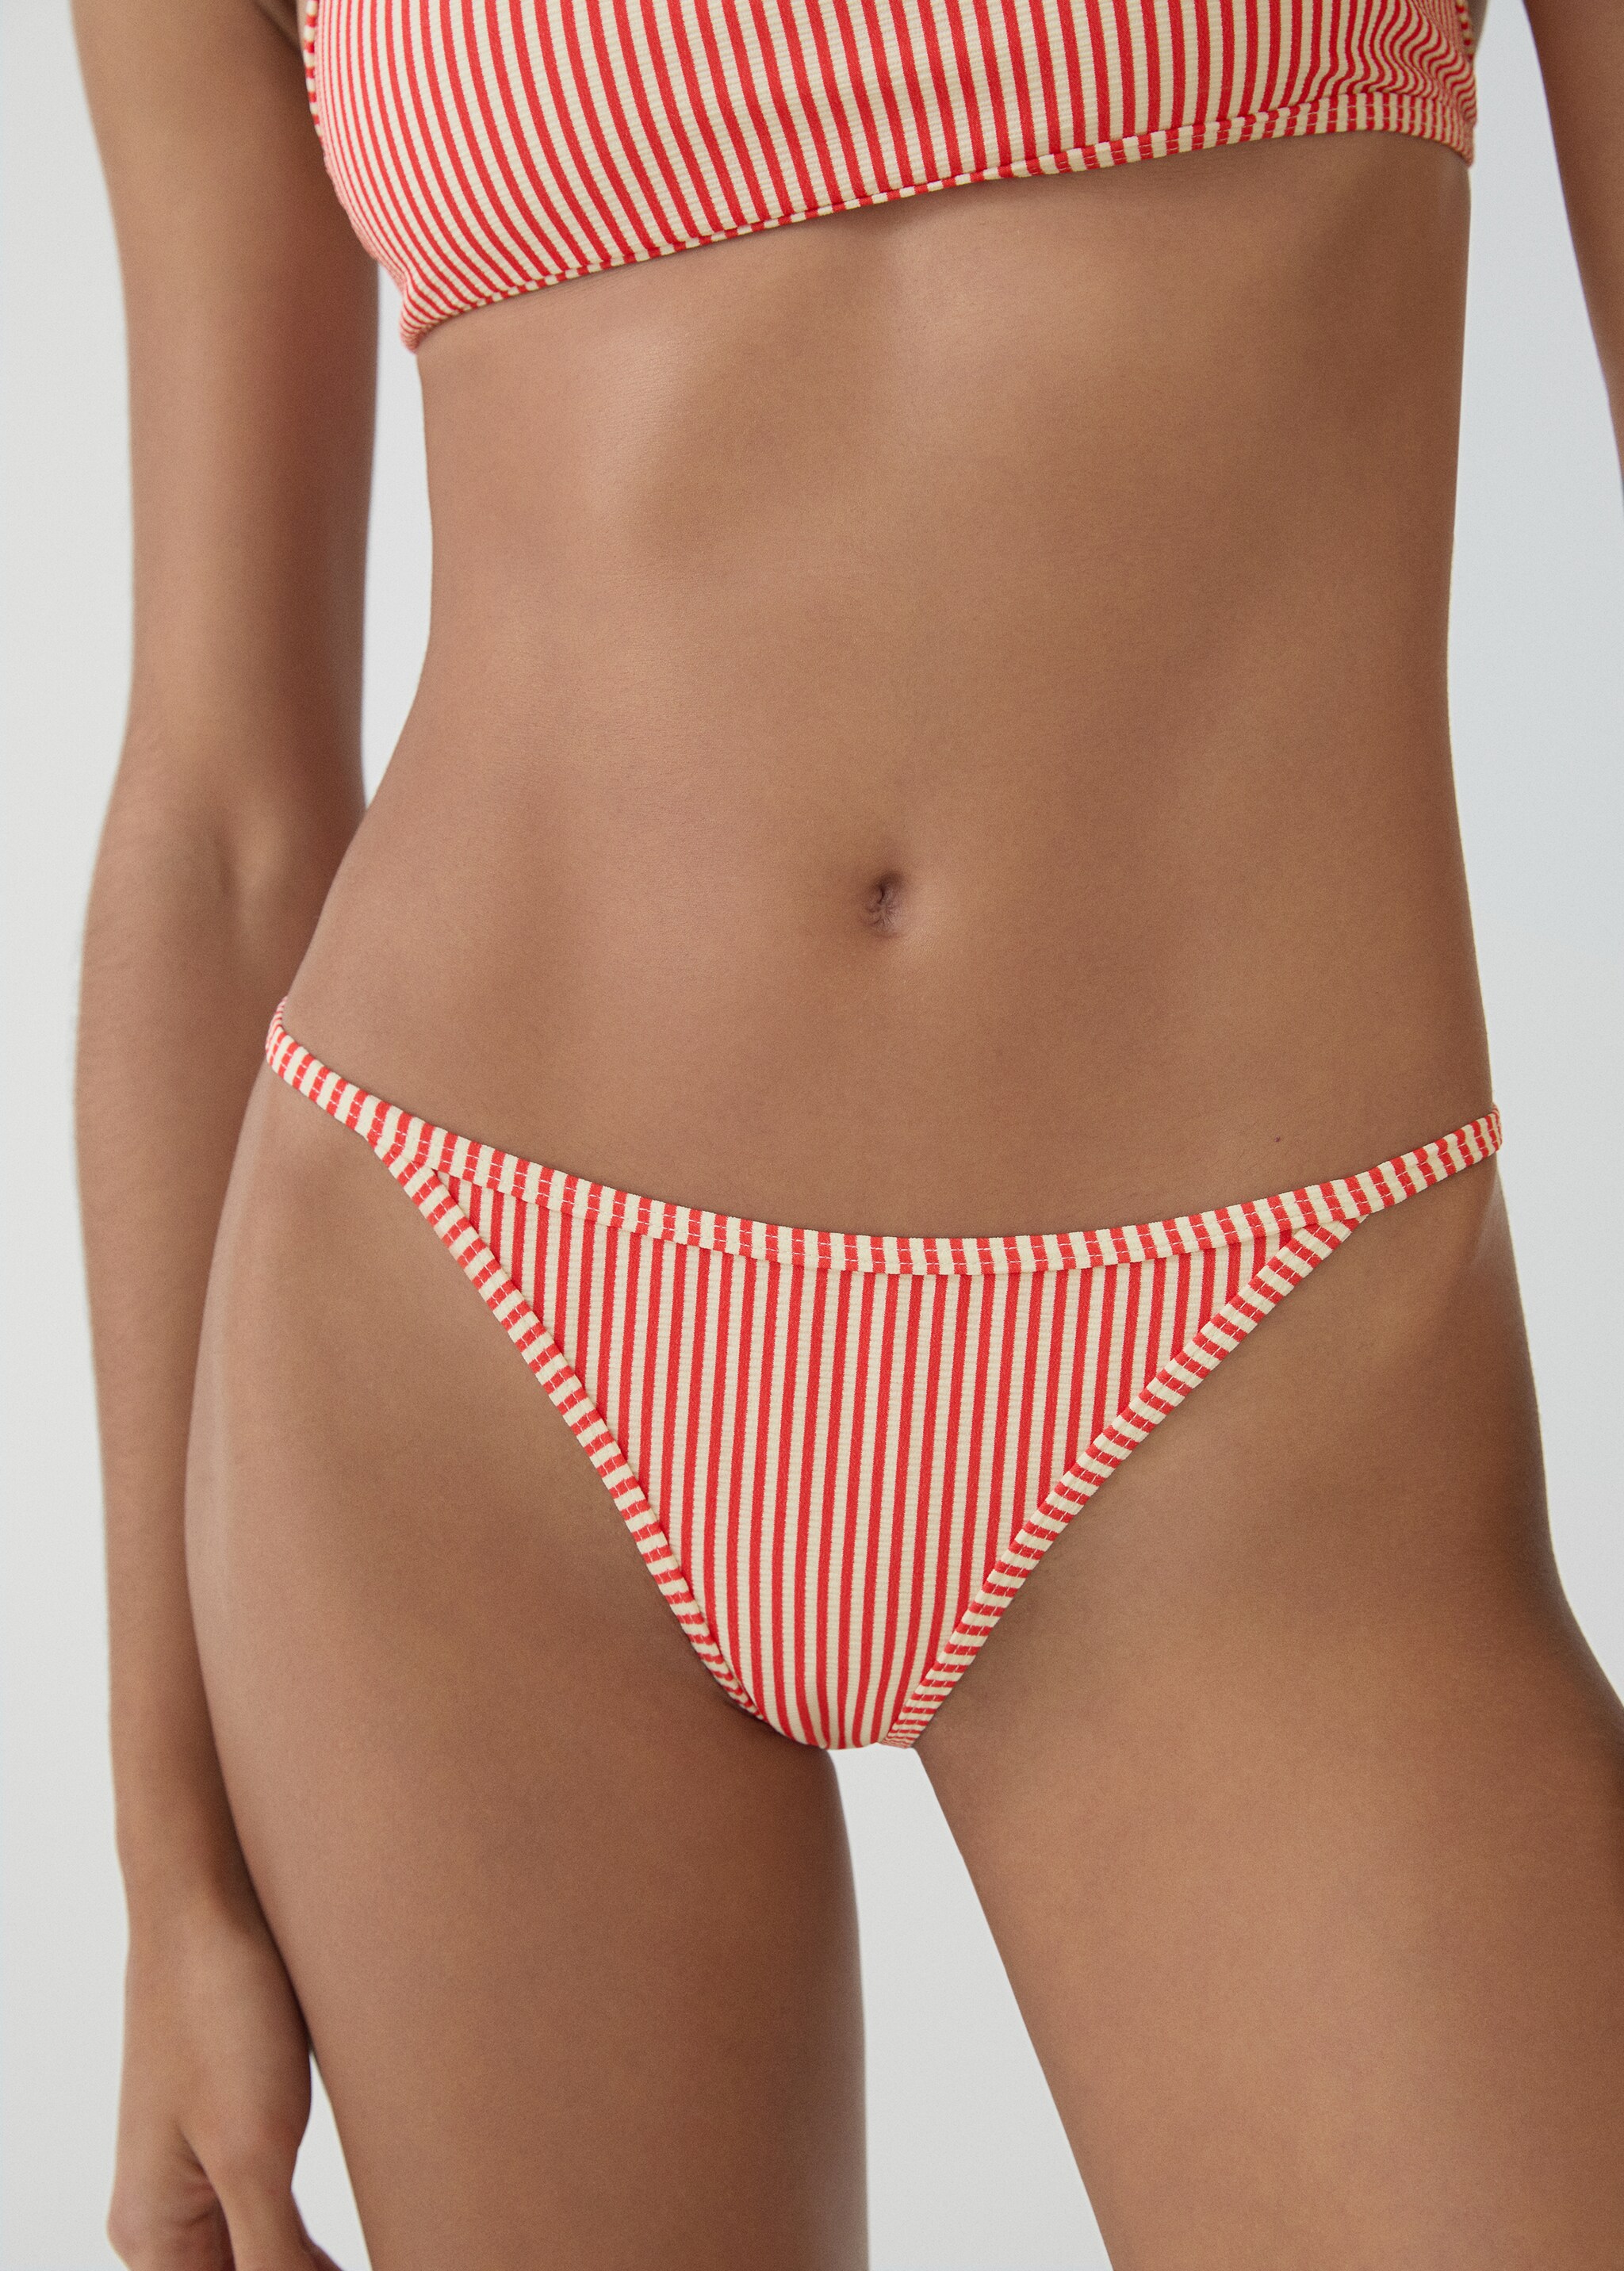 Striped bikini bottom - Details of the article 6